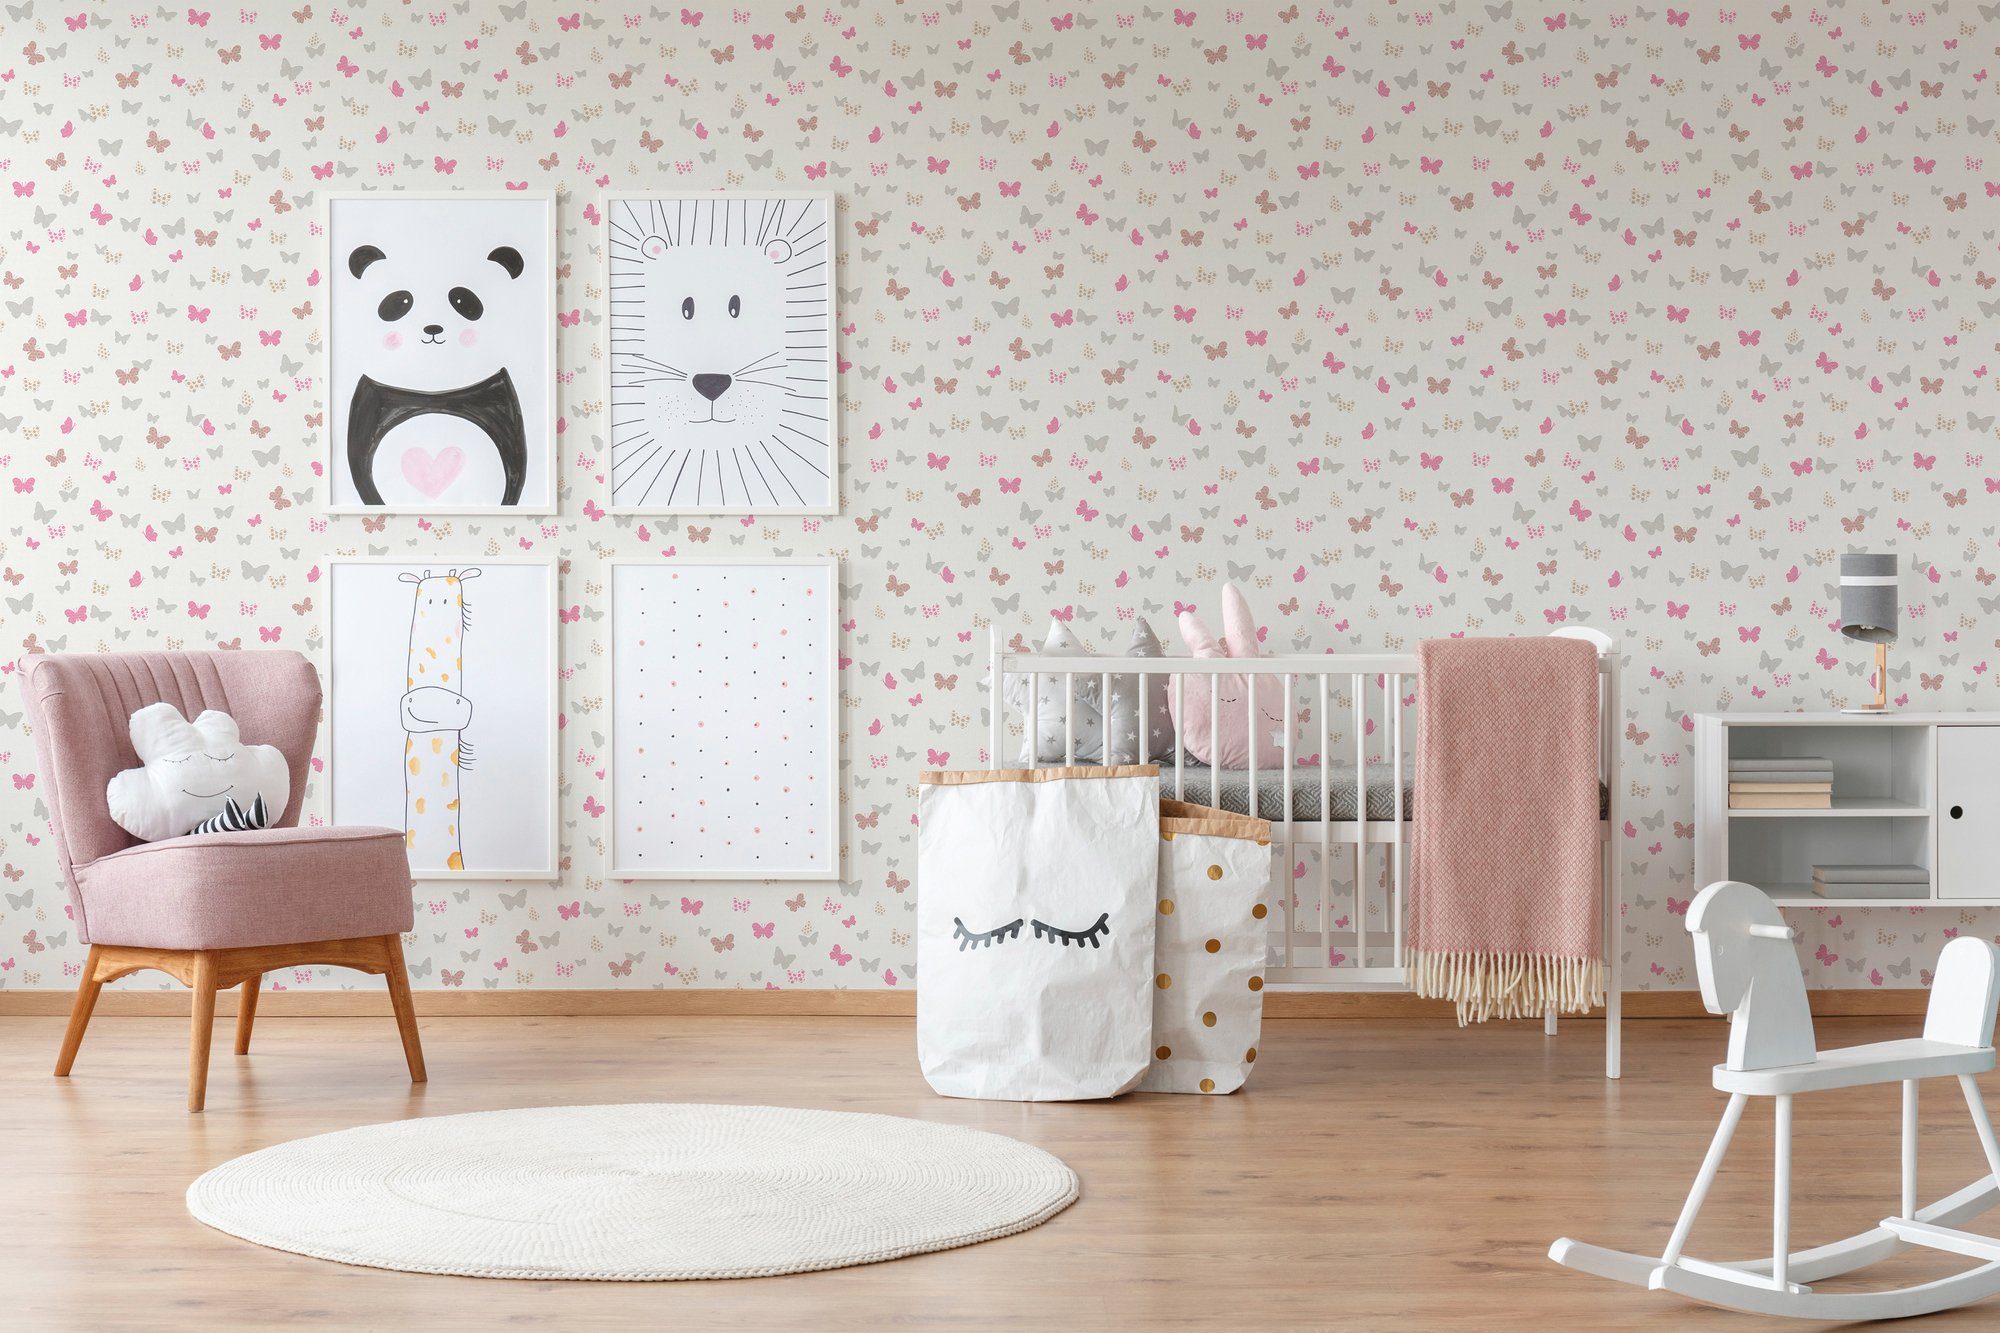 Vliestapete Création Attractive, weiß/grau/rosa Kinderzimmer A.S. Tapete Schmetterling